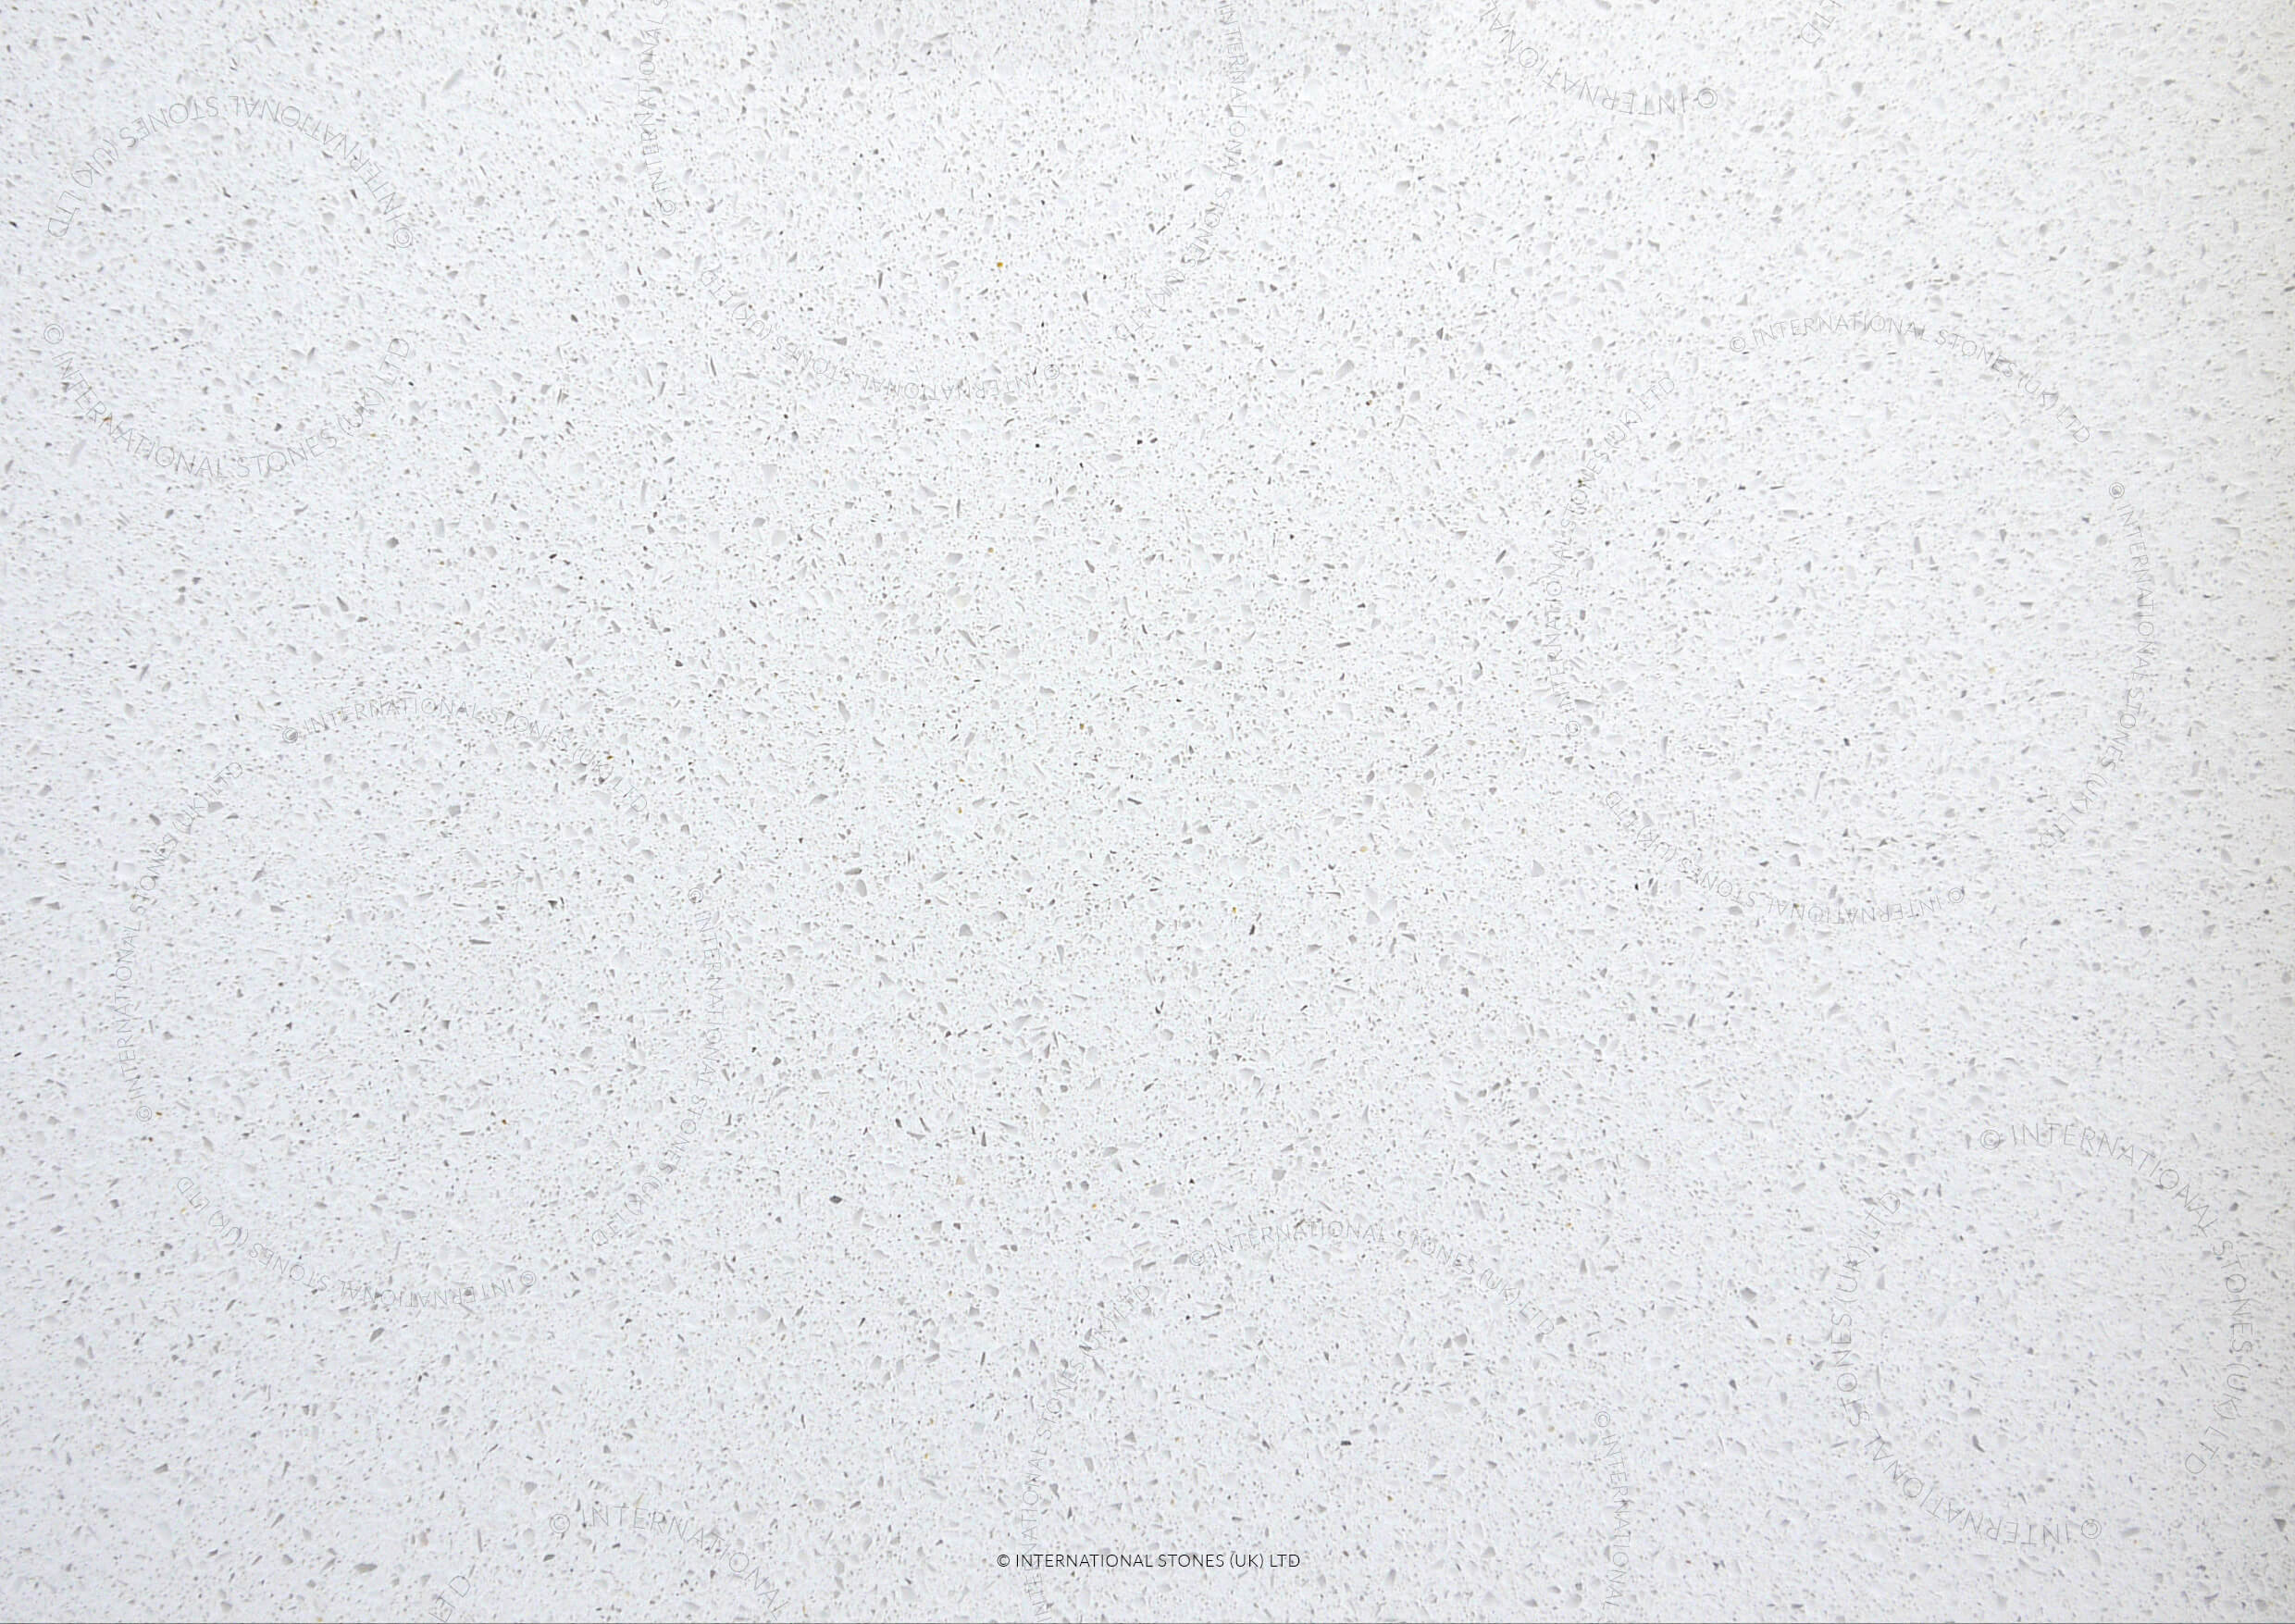 International Stone IQ Blanco Maple - Middlesbrough - Bedale